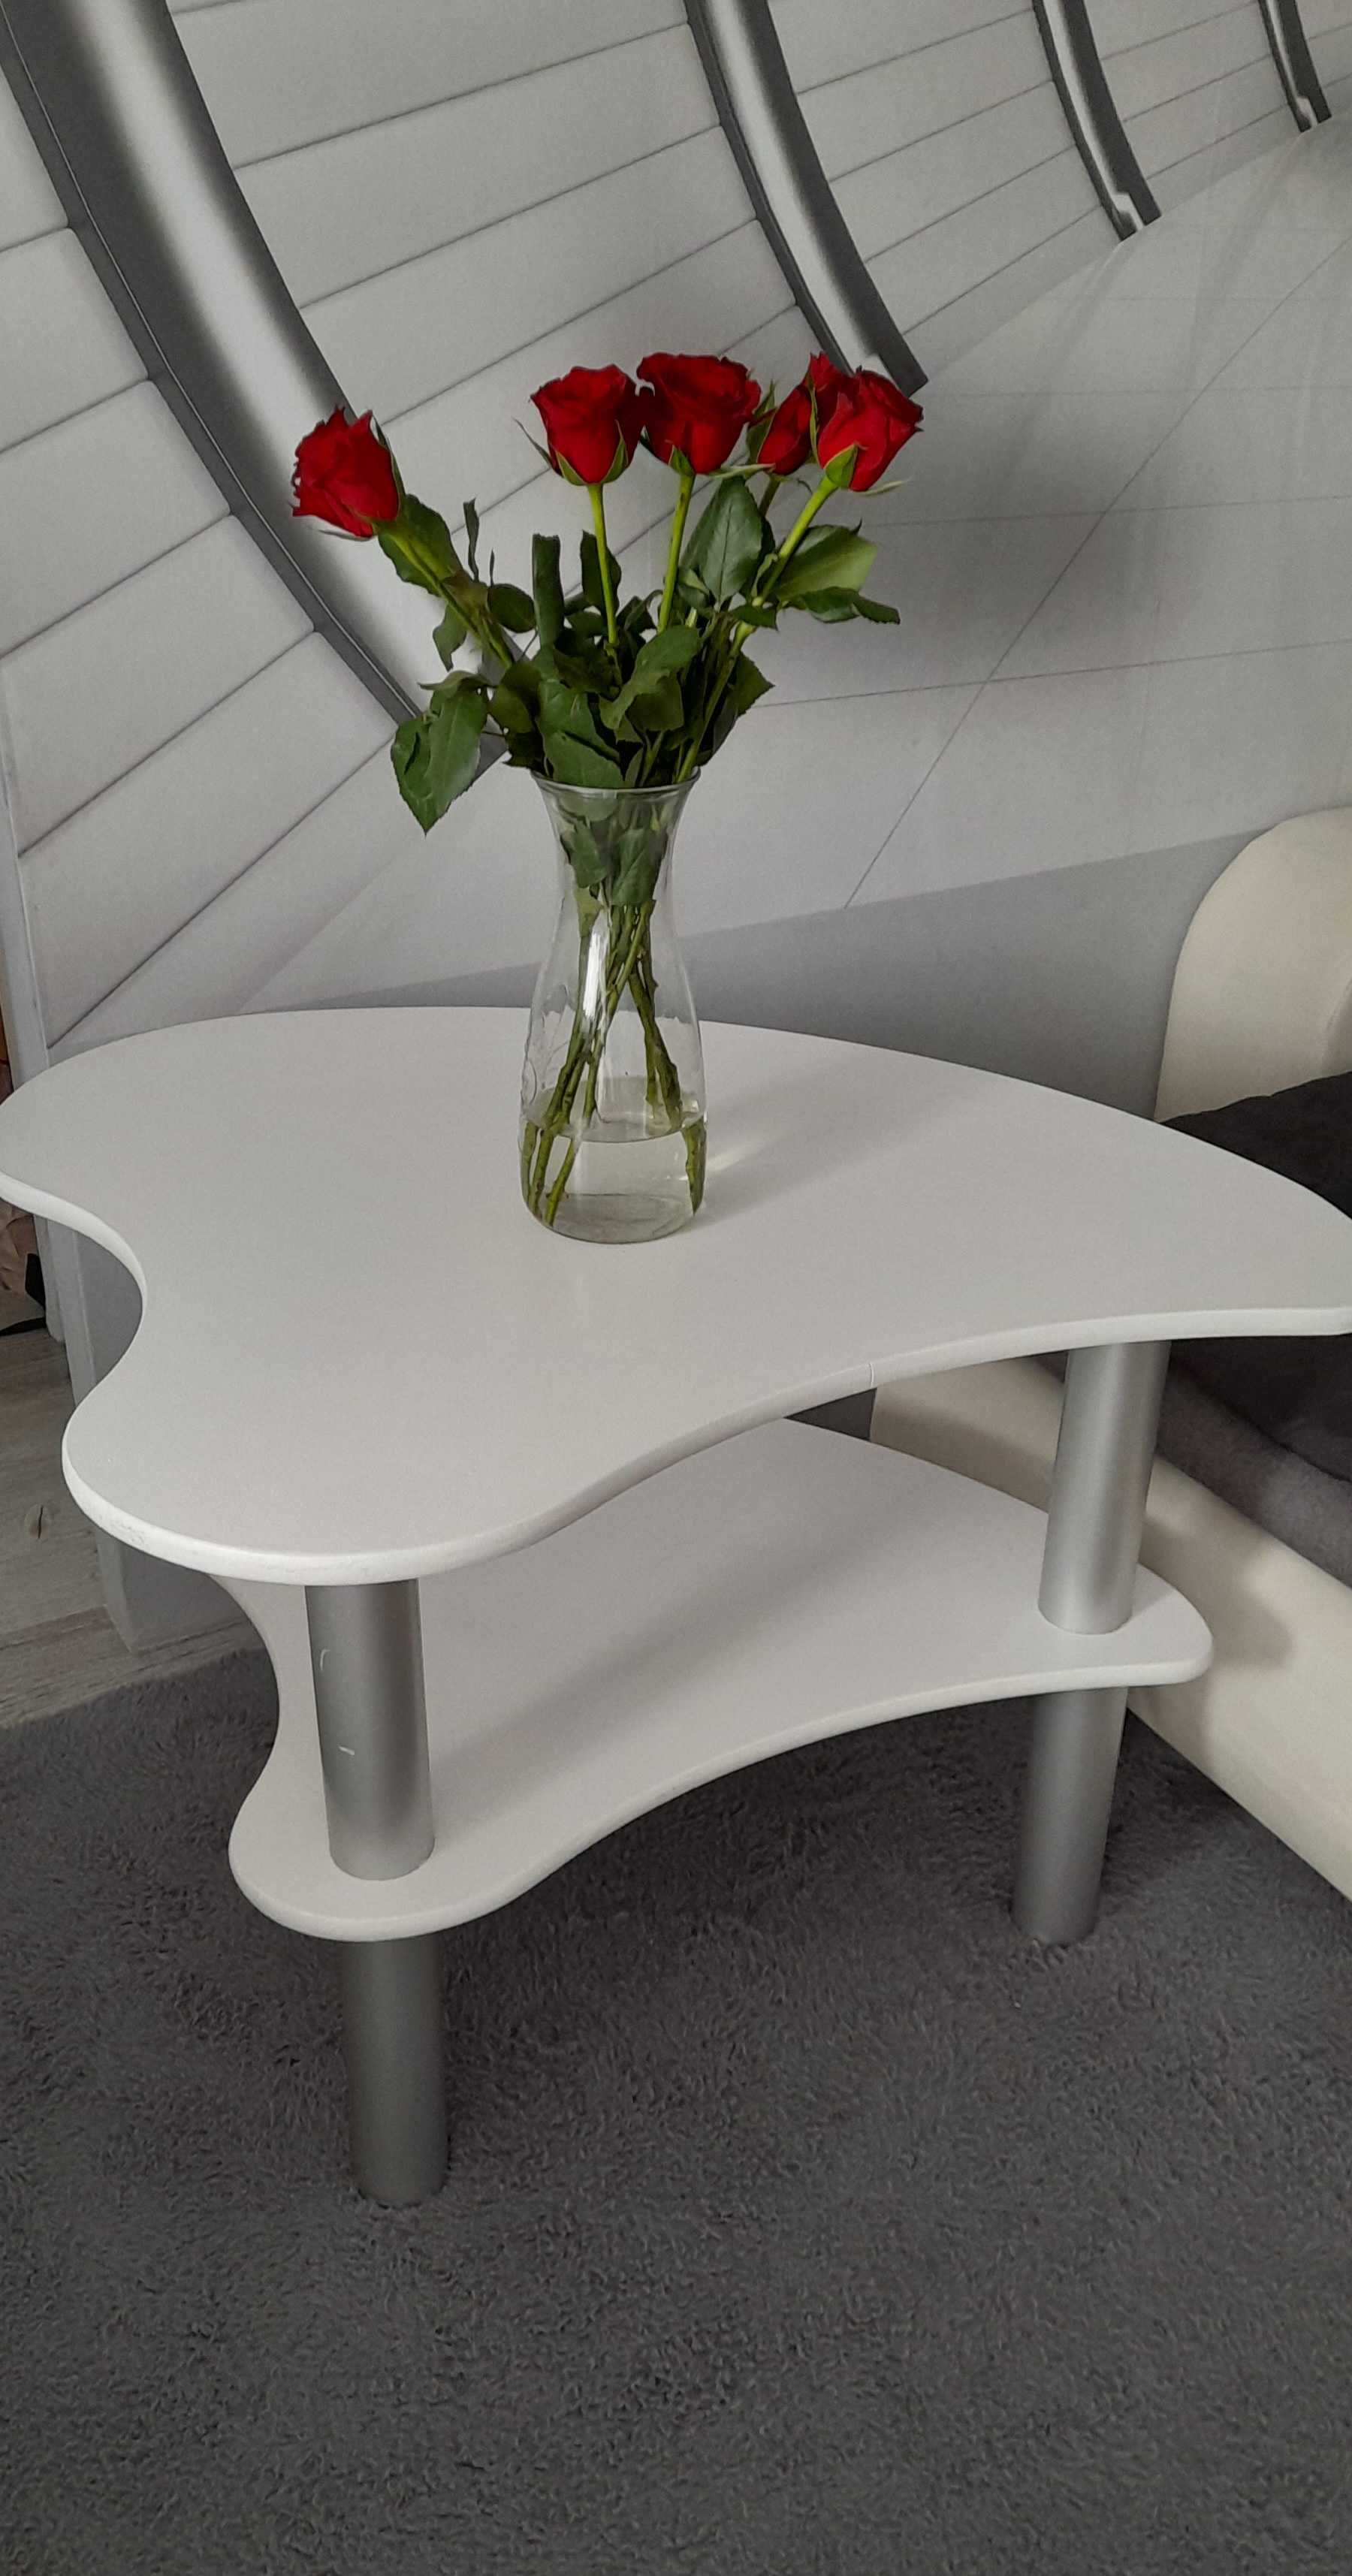 Asymetryczny biały stolik 2- poziomy srebrne nogi